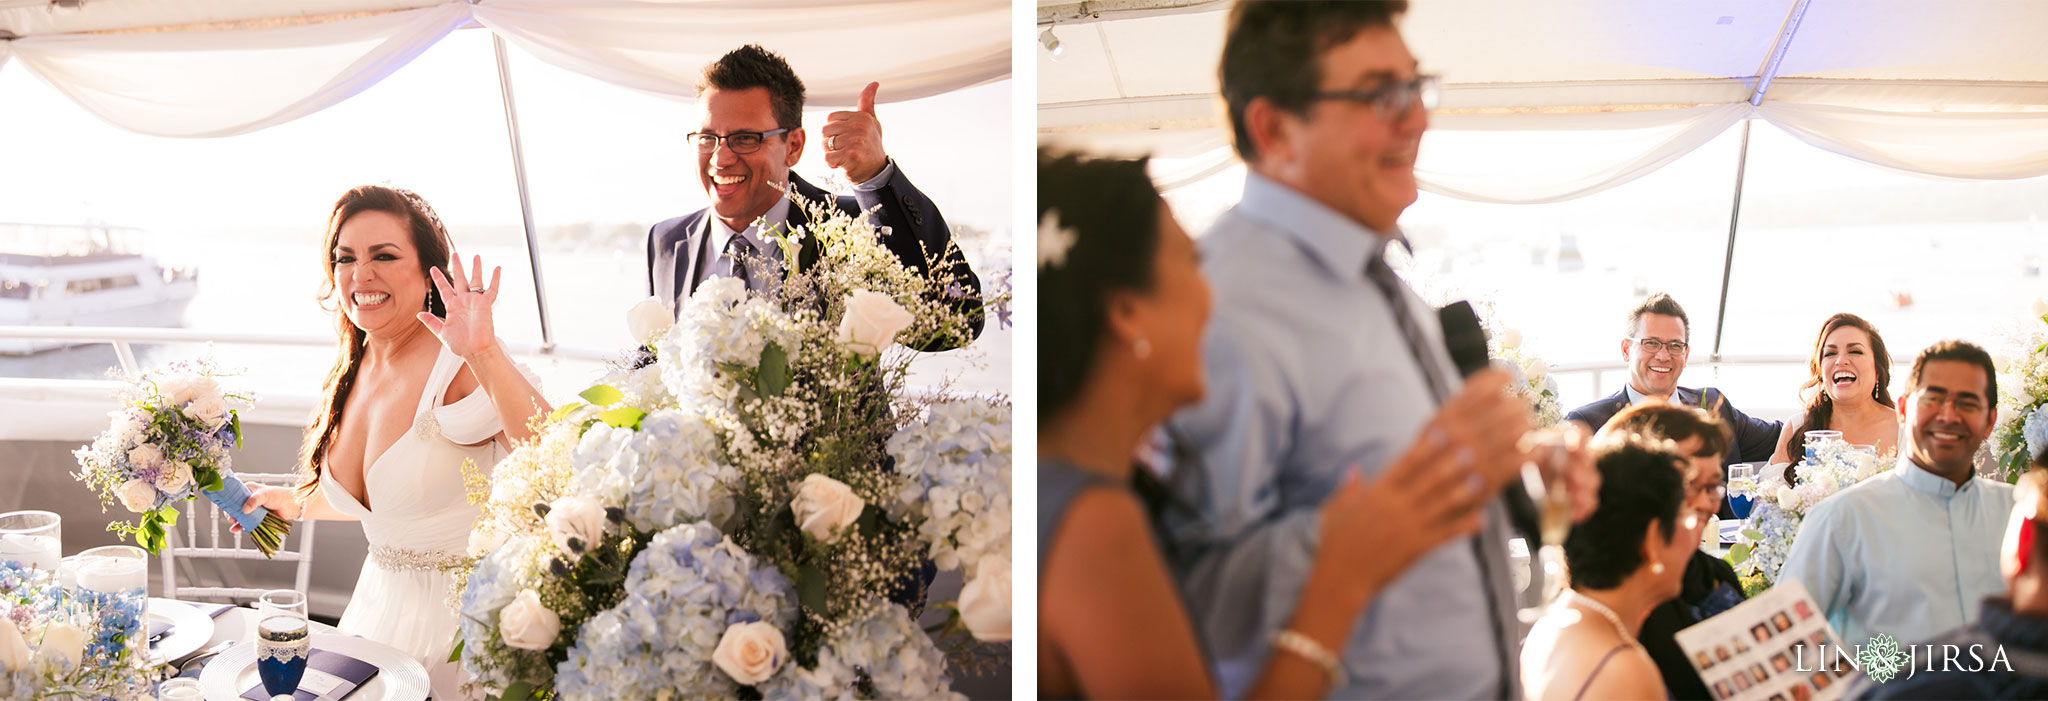 023 charter yachts newport beach wedding reception photography